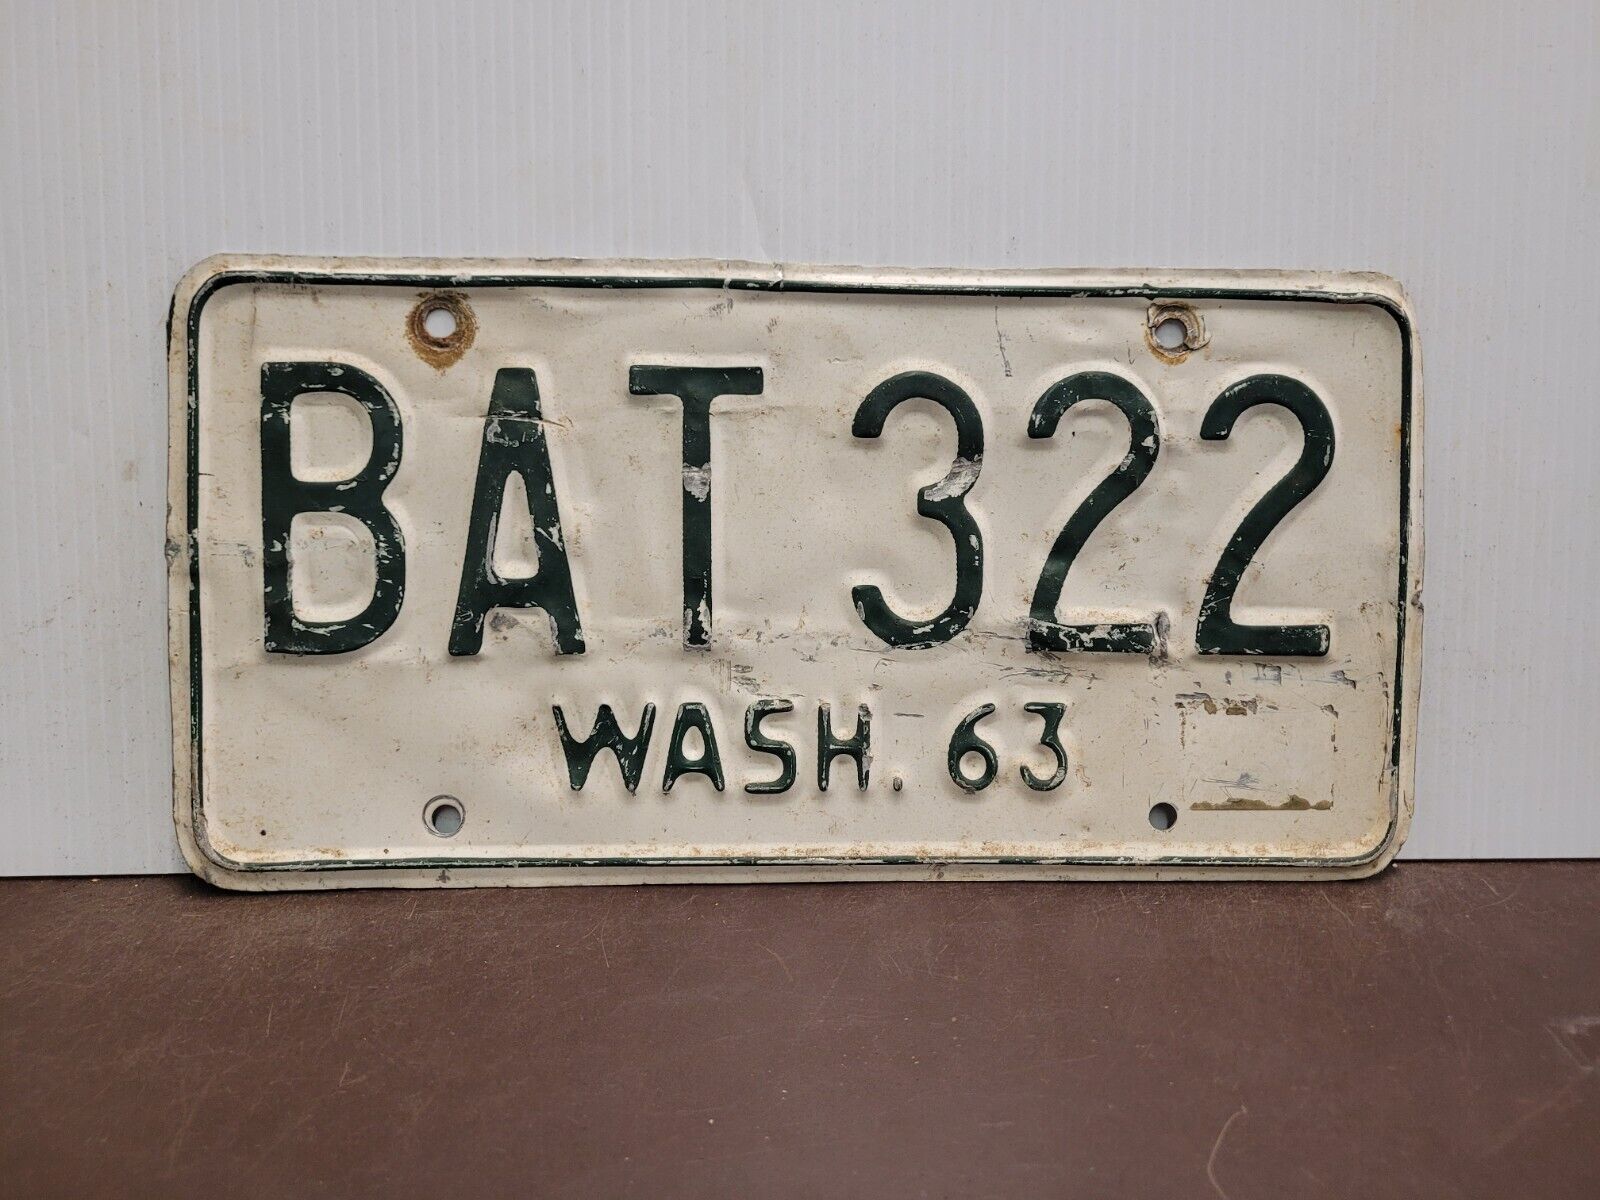 1963 Washington License Plate Tag Original.